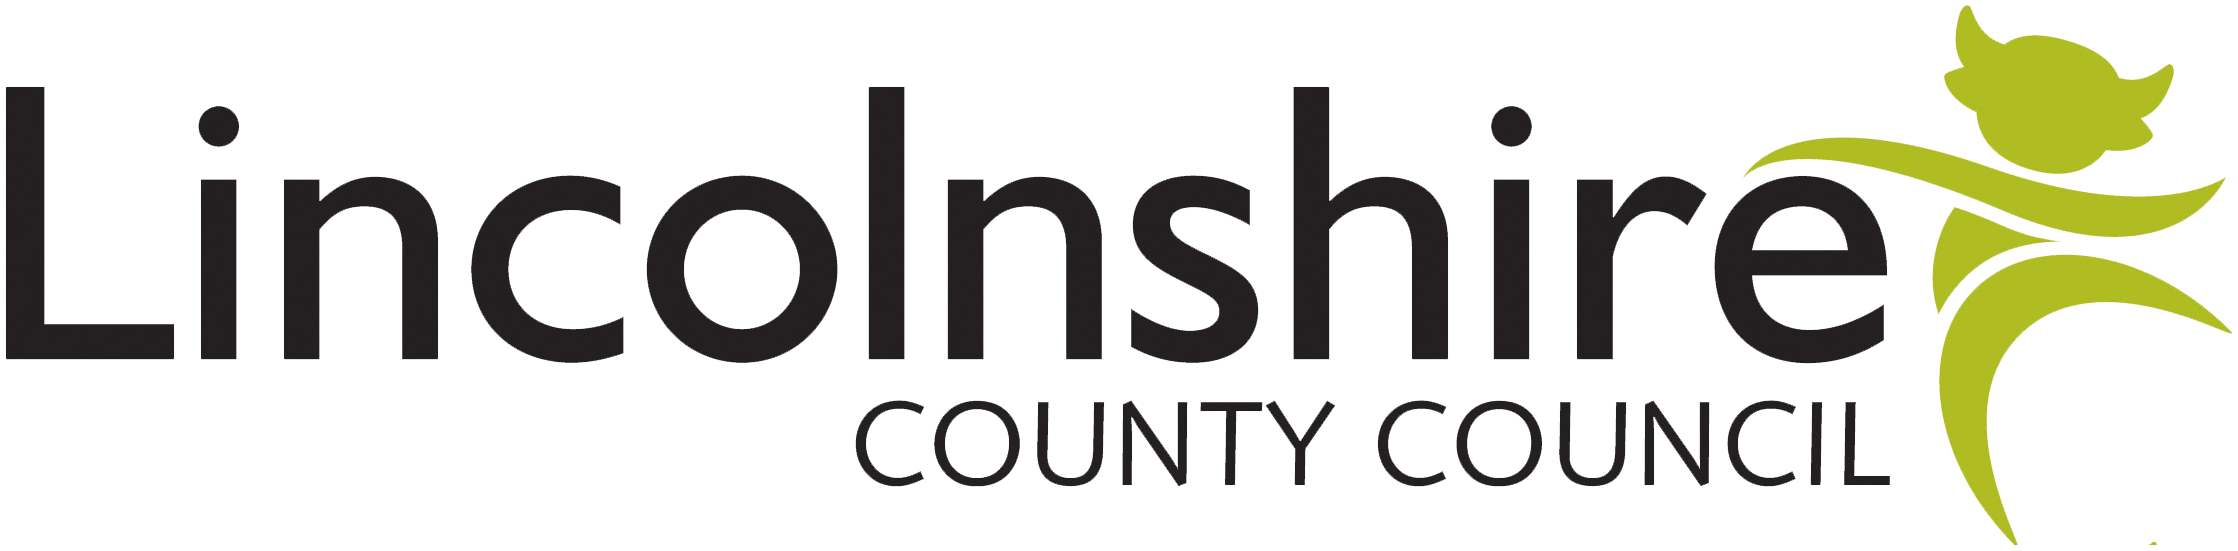 Lincolnshire County Council Logo